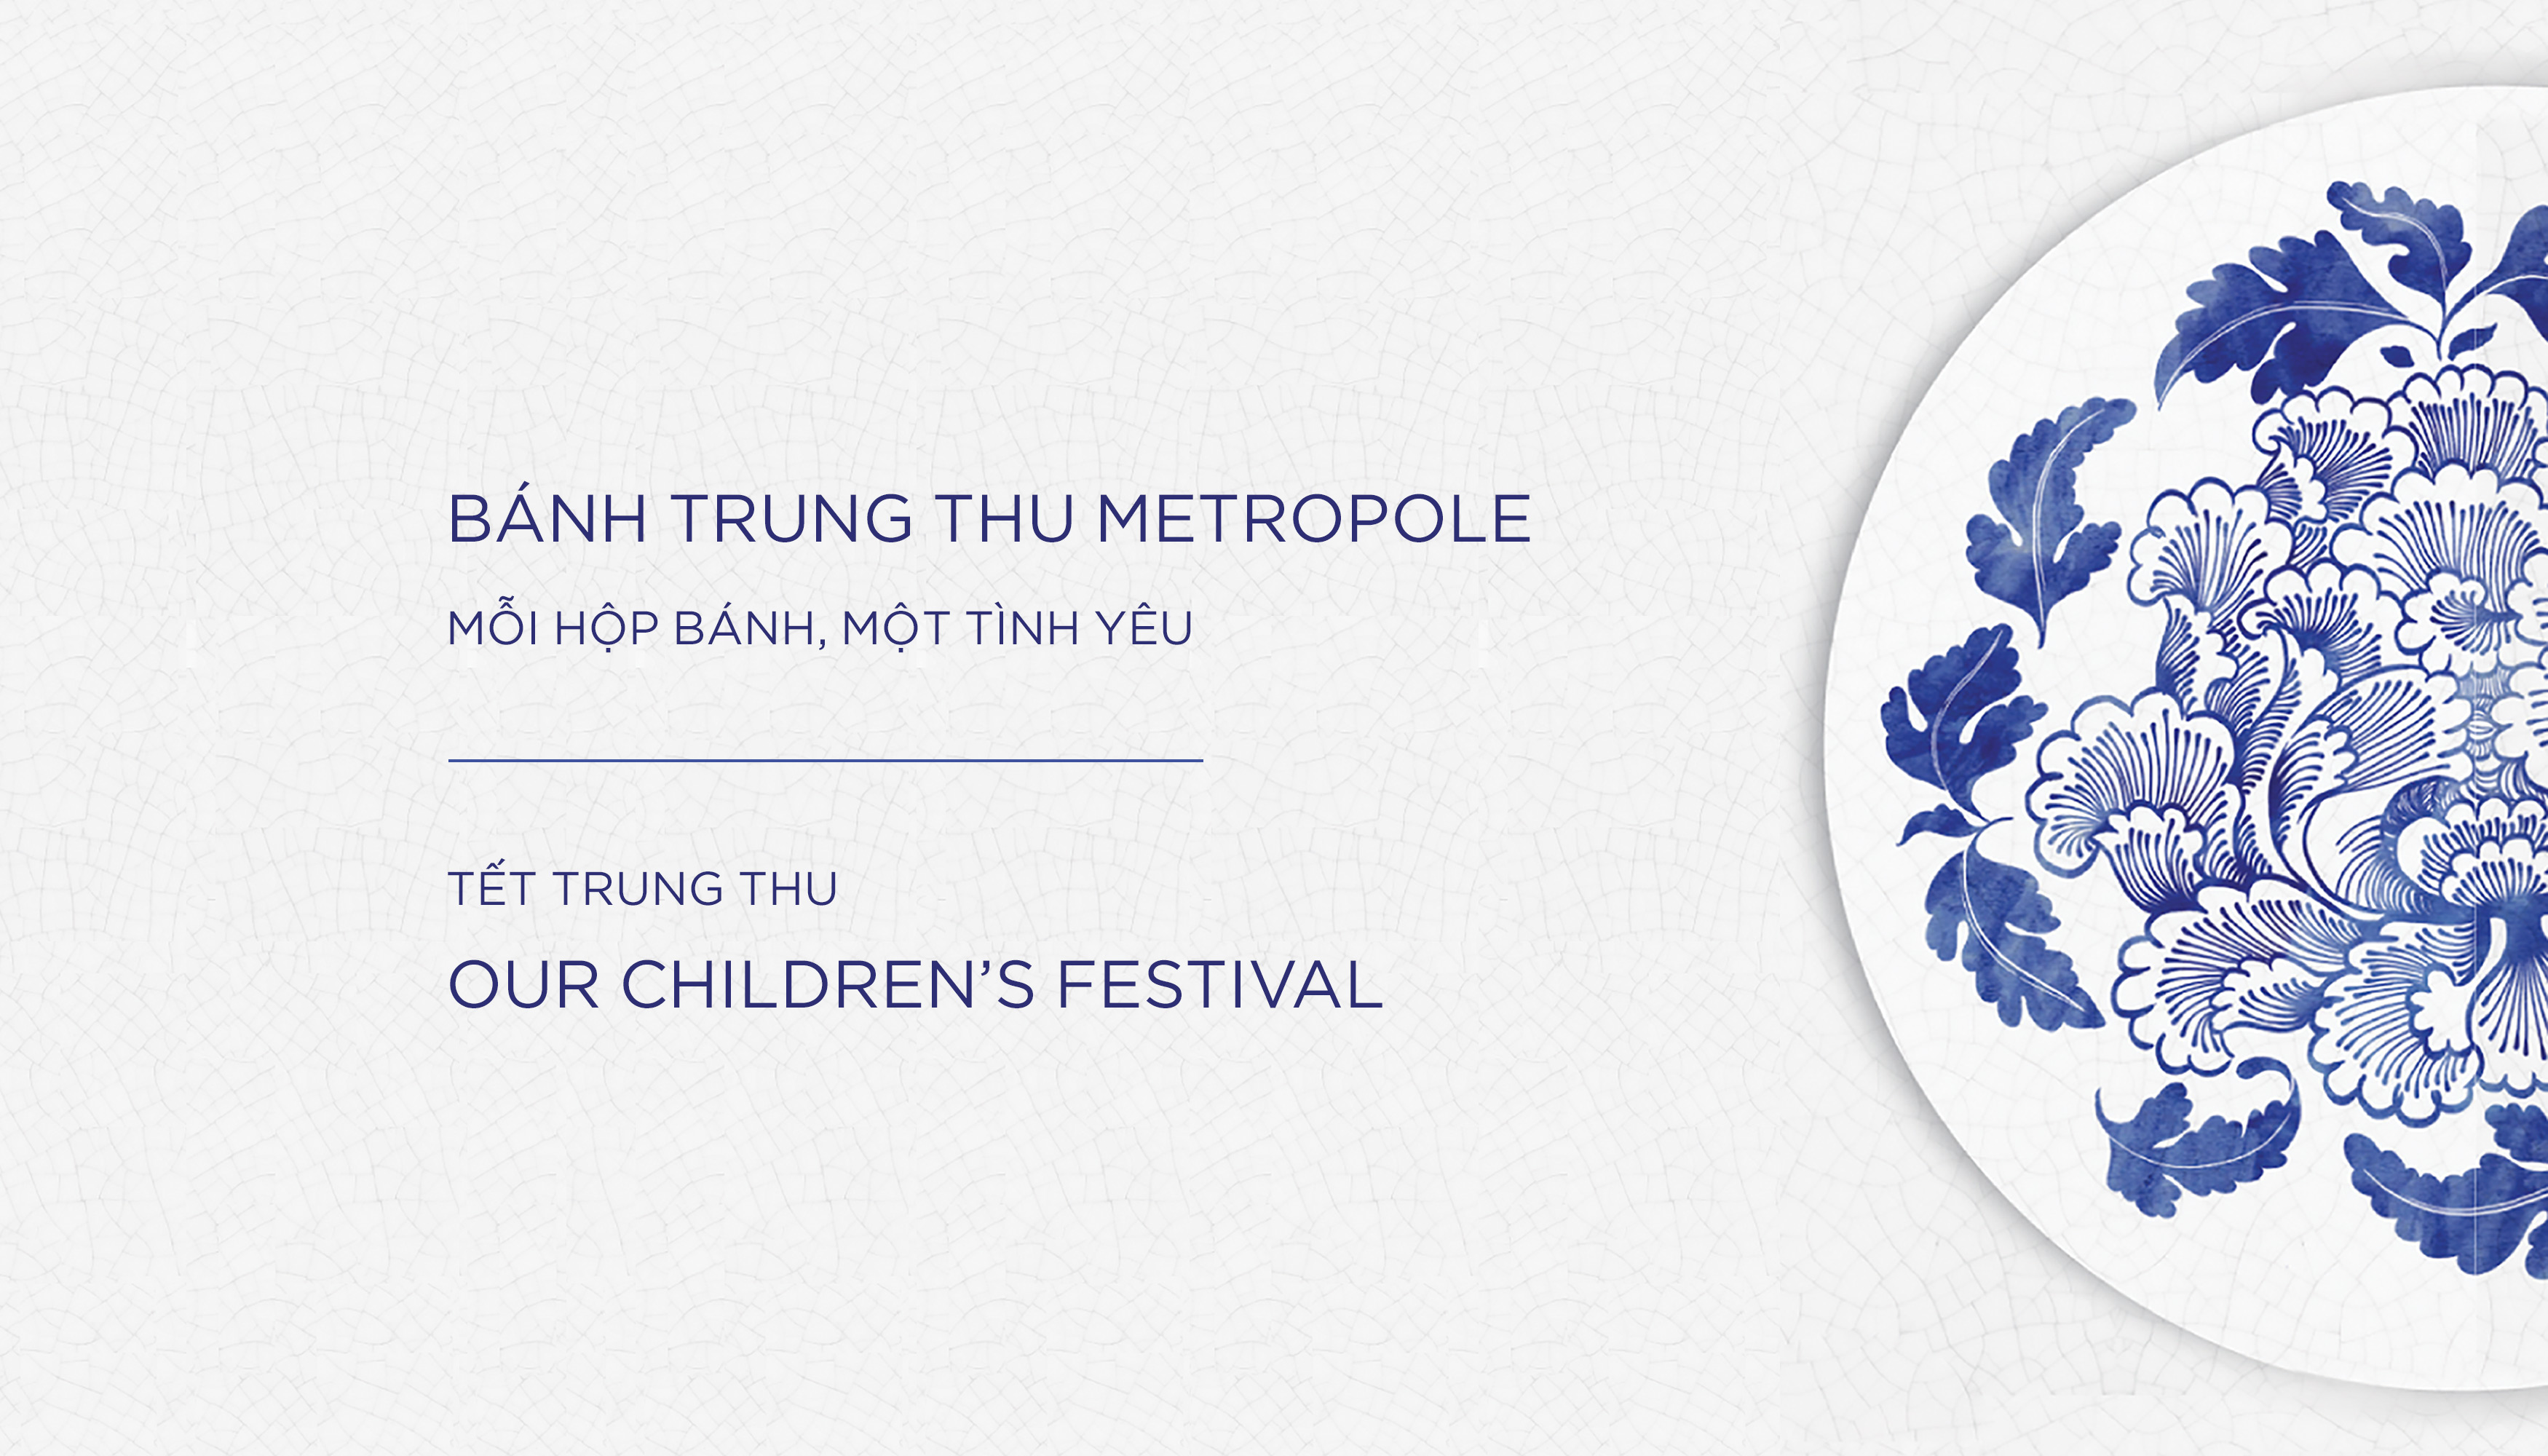 metropole-hanoi-unveils-mooncake-collection-for-mid-autumn-festival